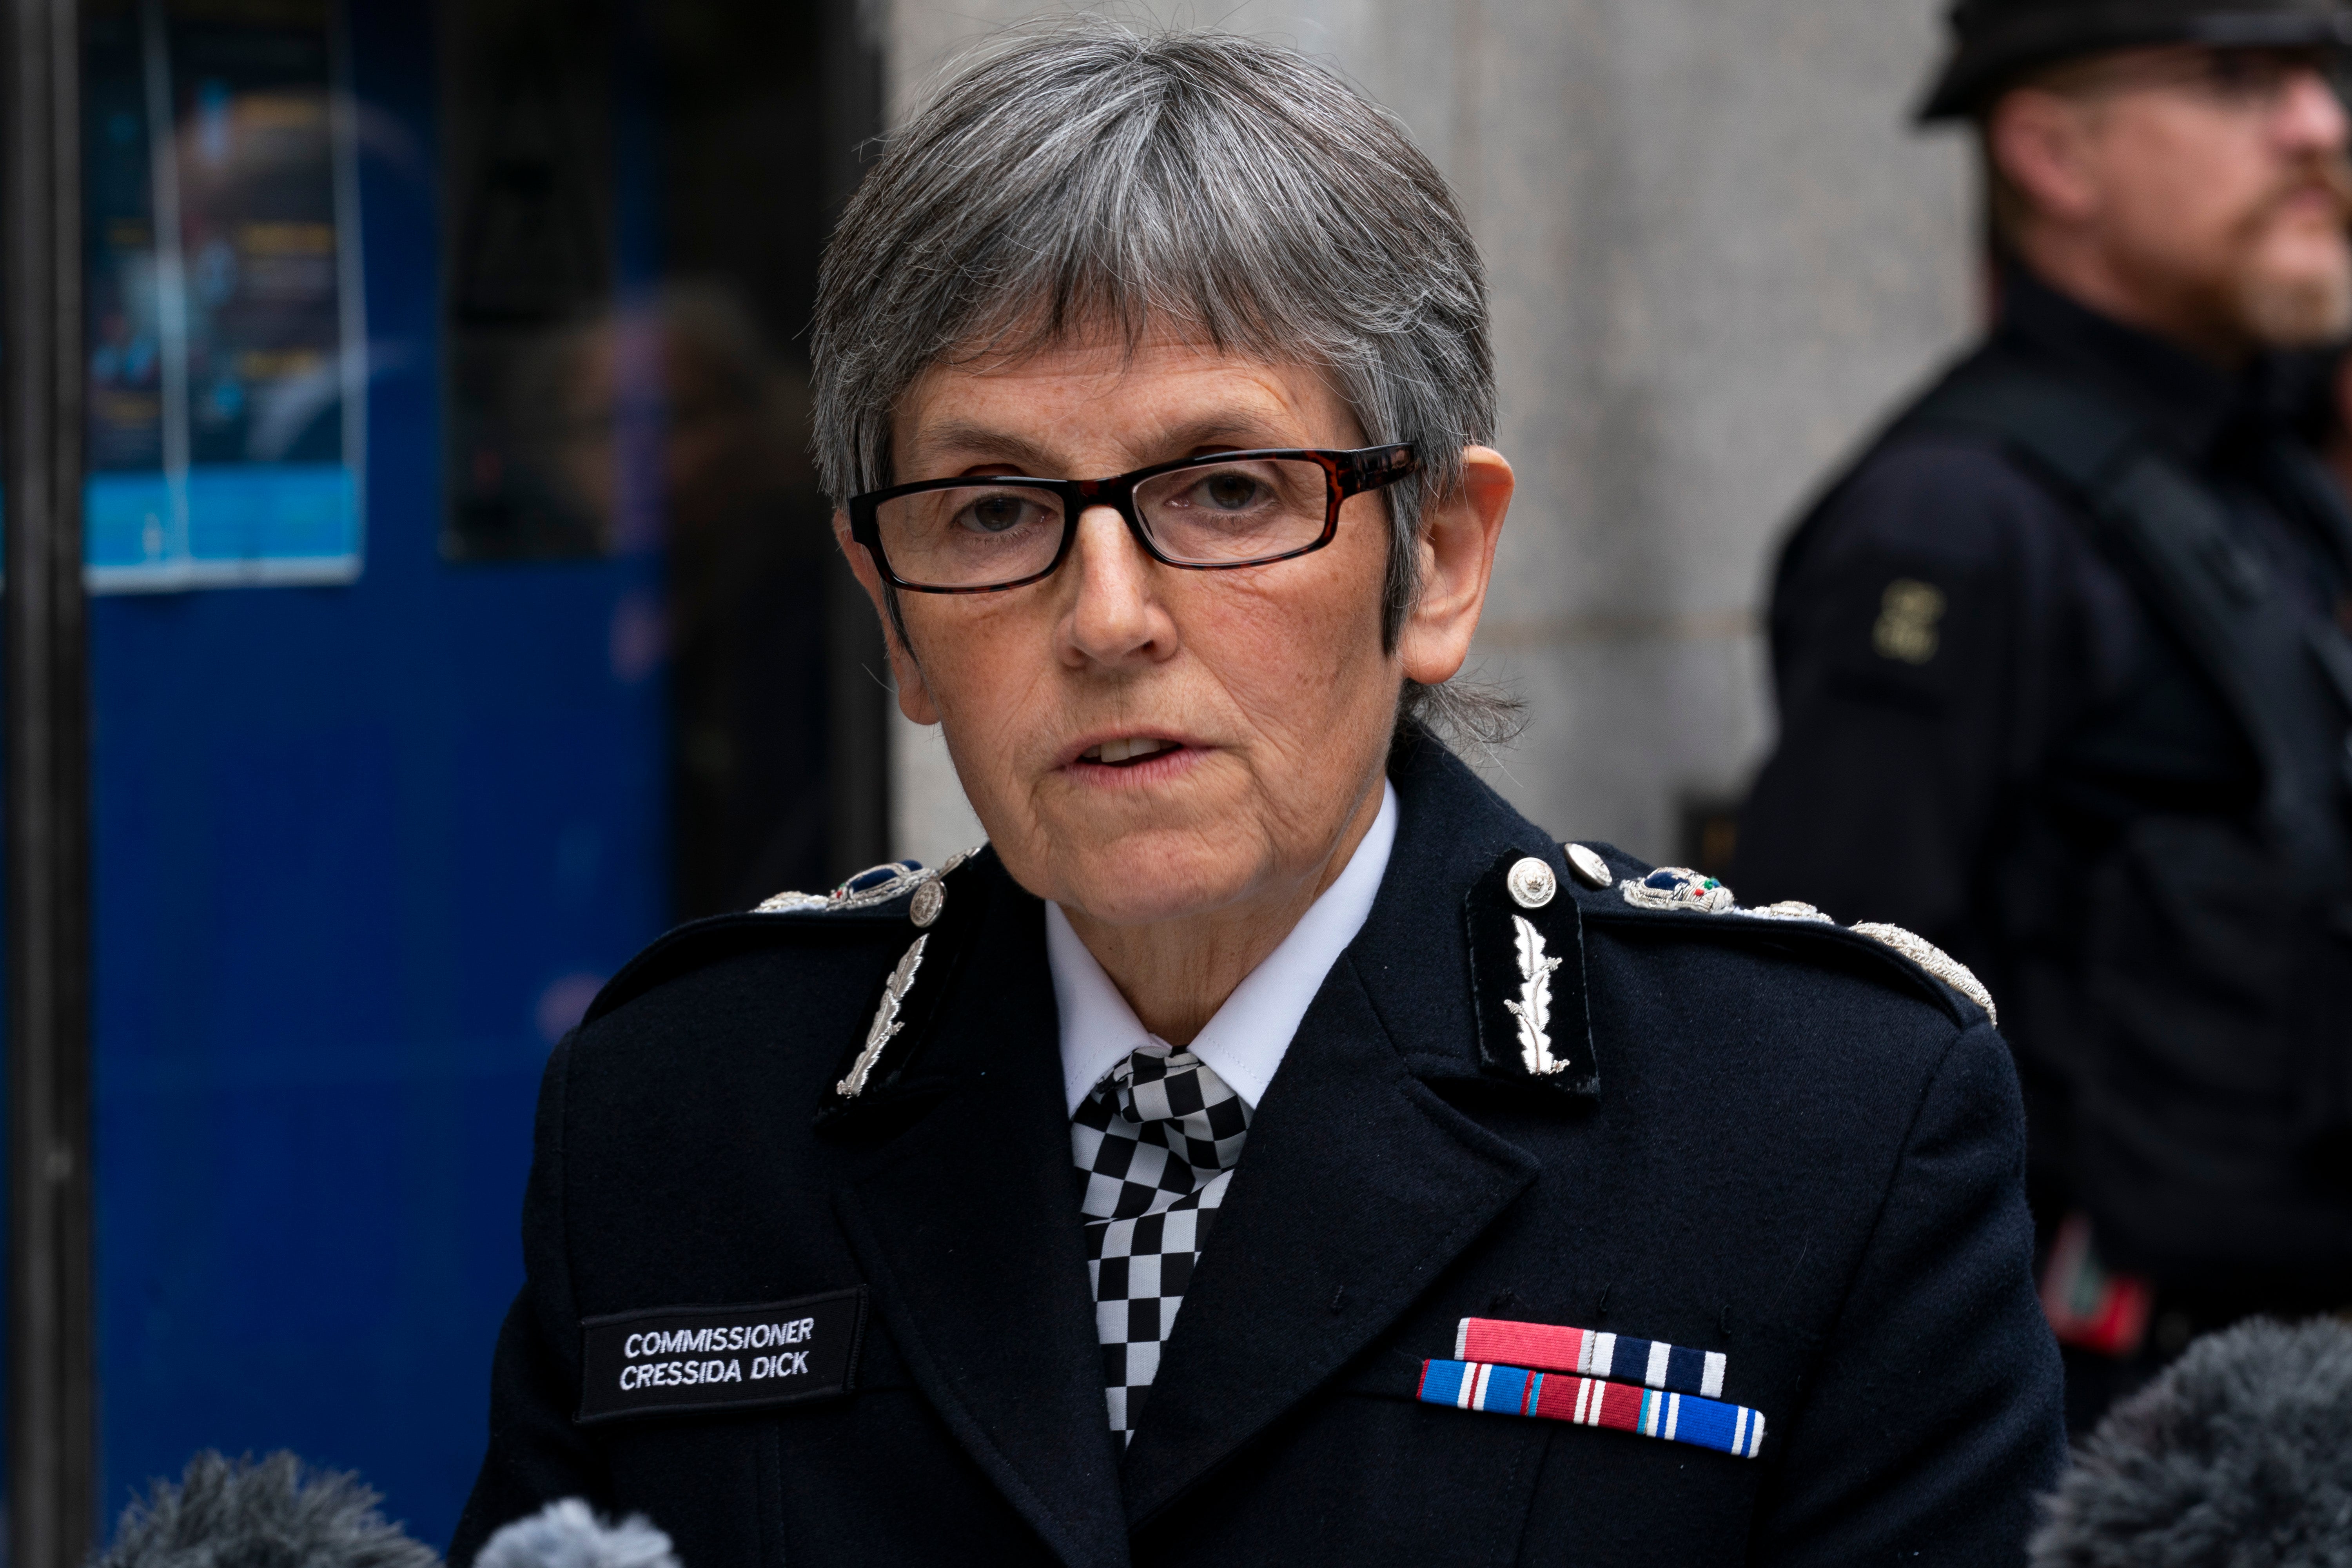 Metropolitan Police Commissioner Dame Cressida Dick has faced calls to resign